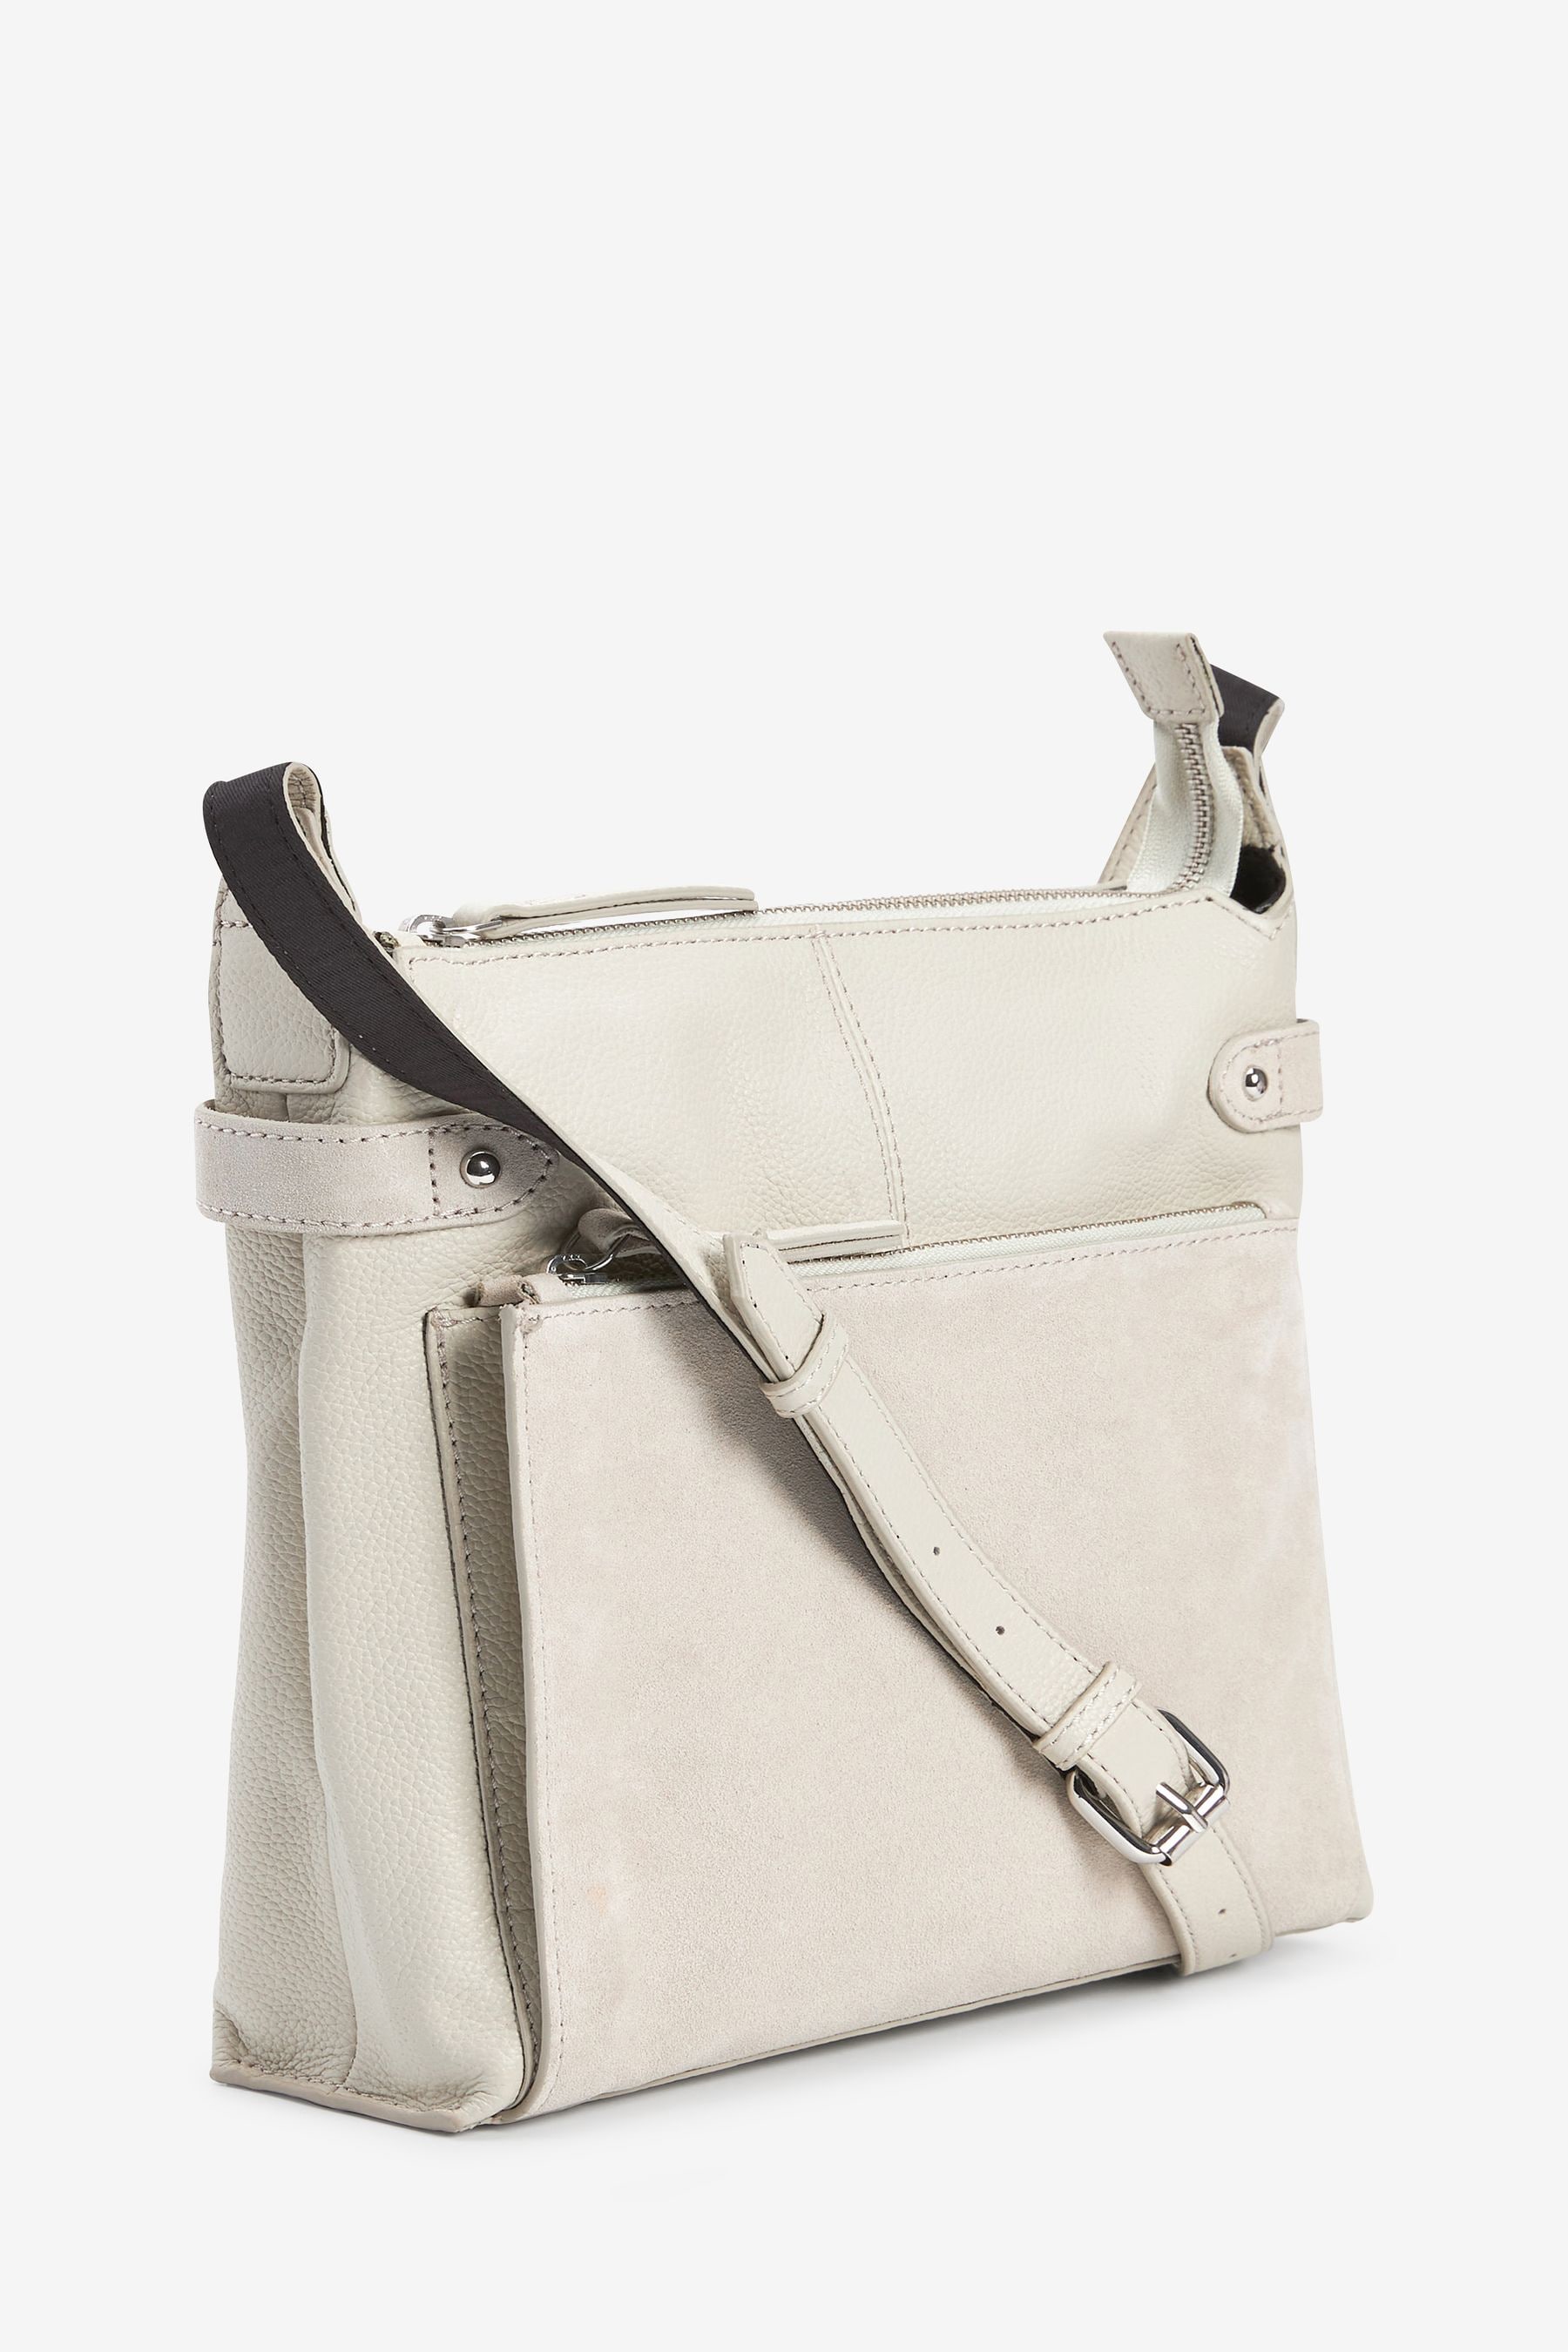 Buy Bone Cream Leather Pocket Messenger Bag from the Next UK online shop